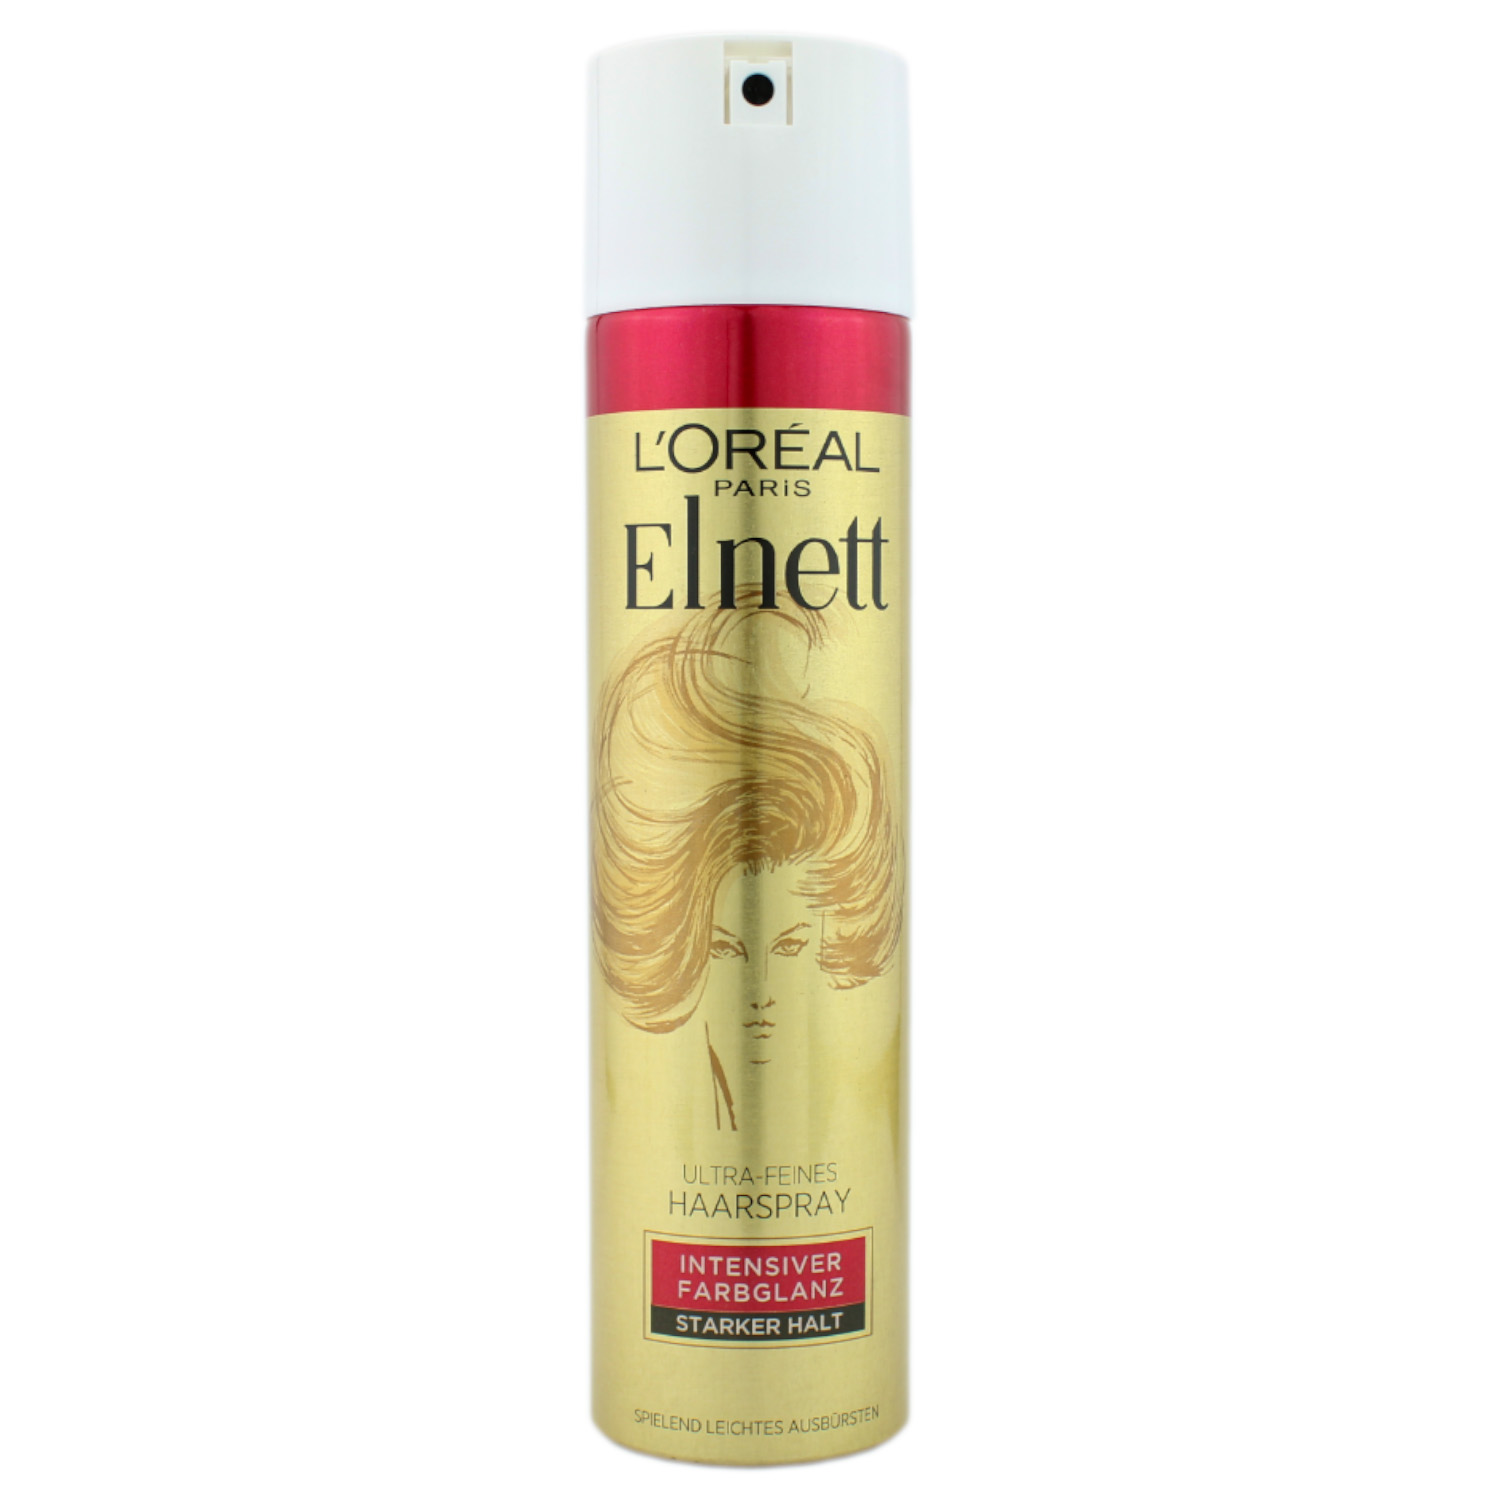 L'Oréal Elnett Haarspray Intensiver Farbglanz Starker Halt 250ml